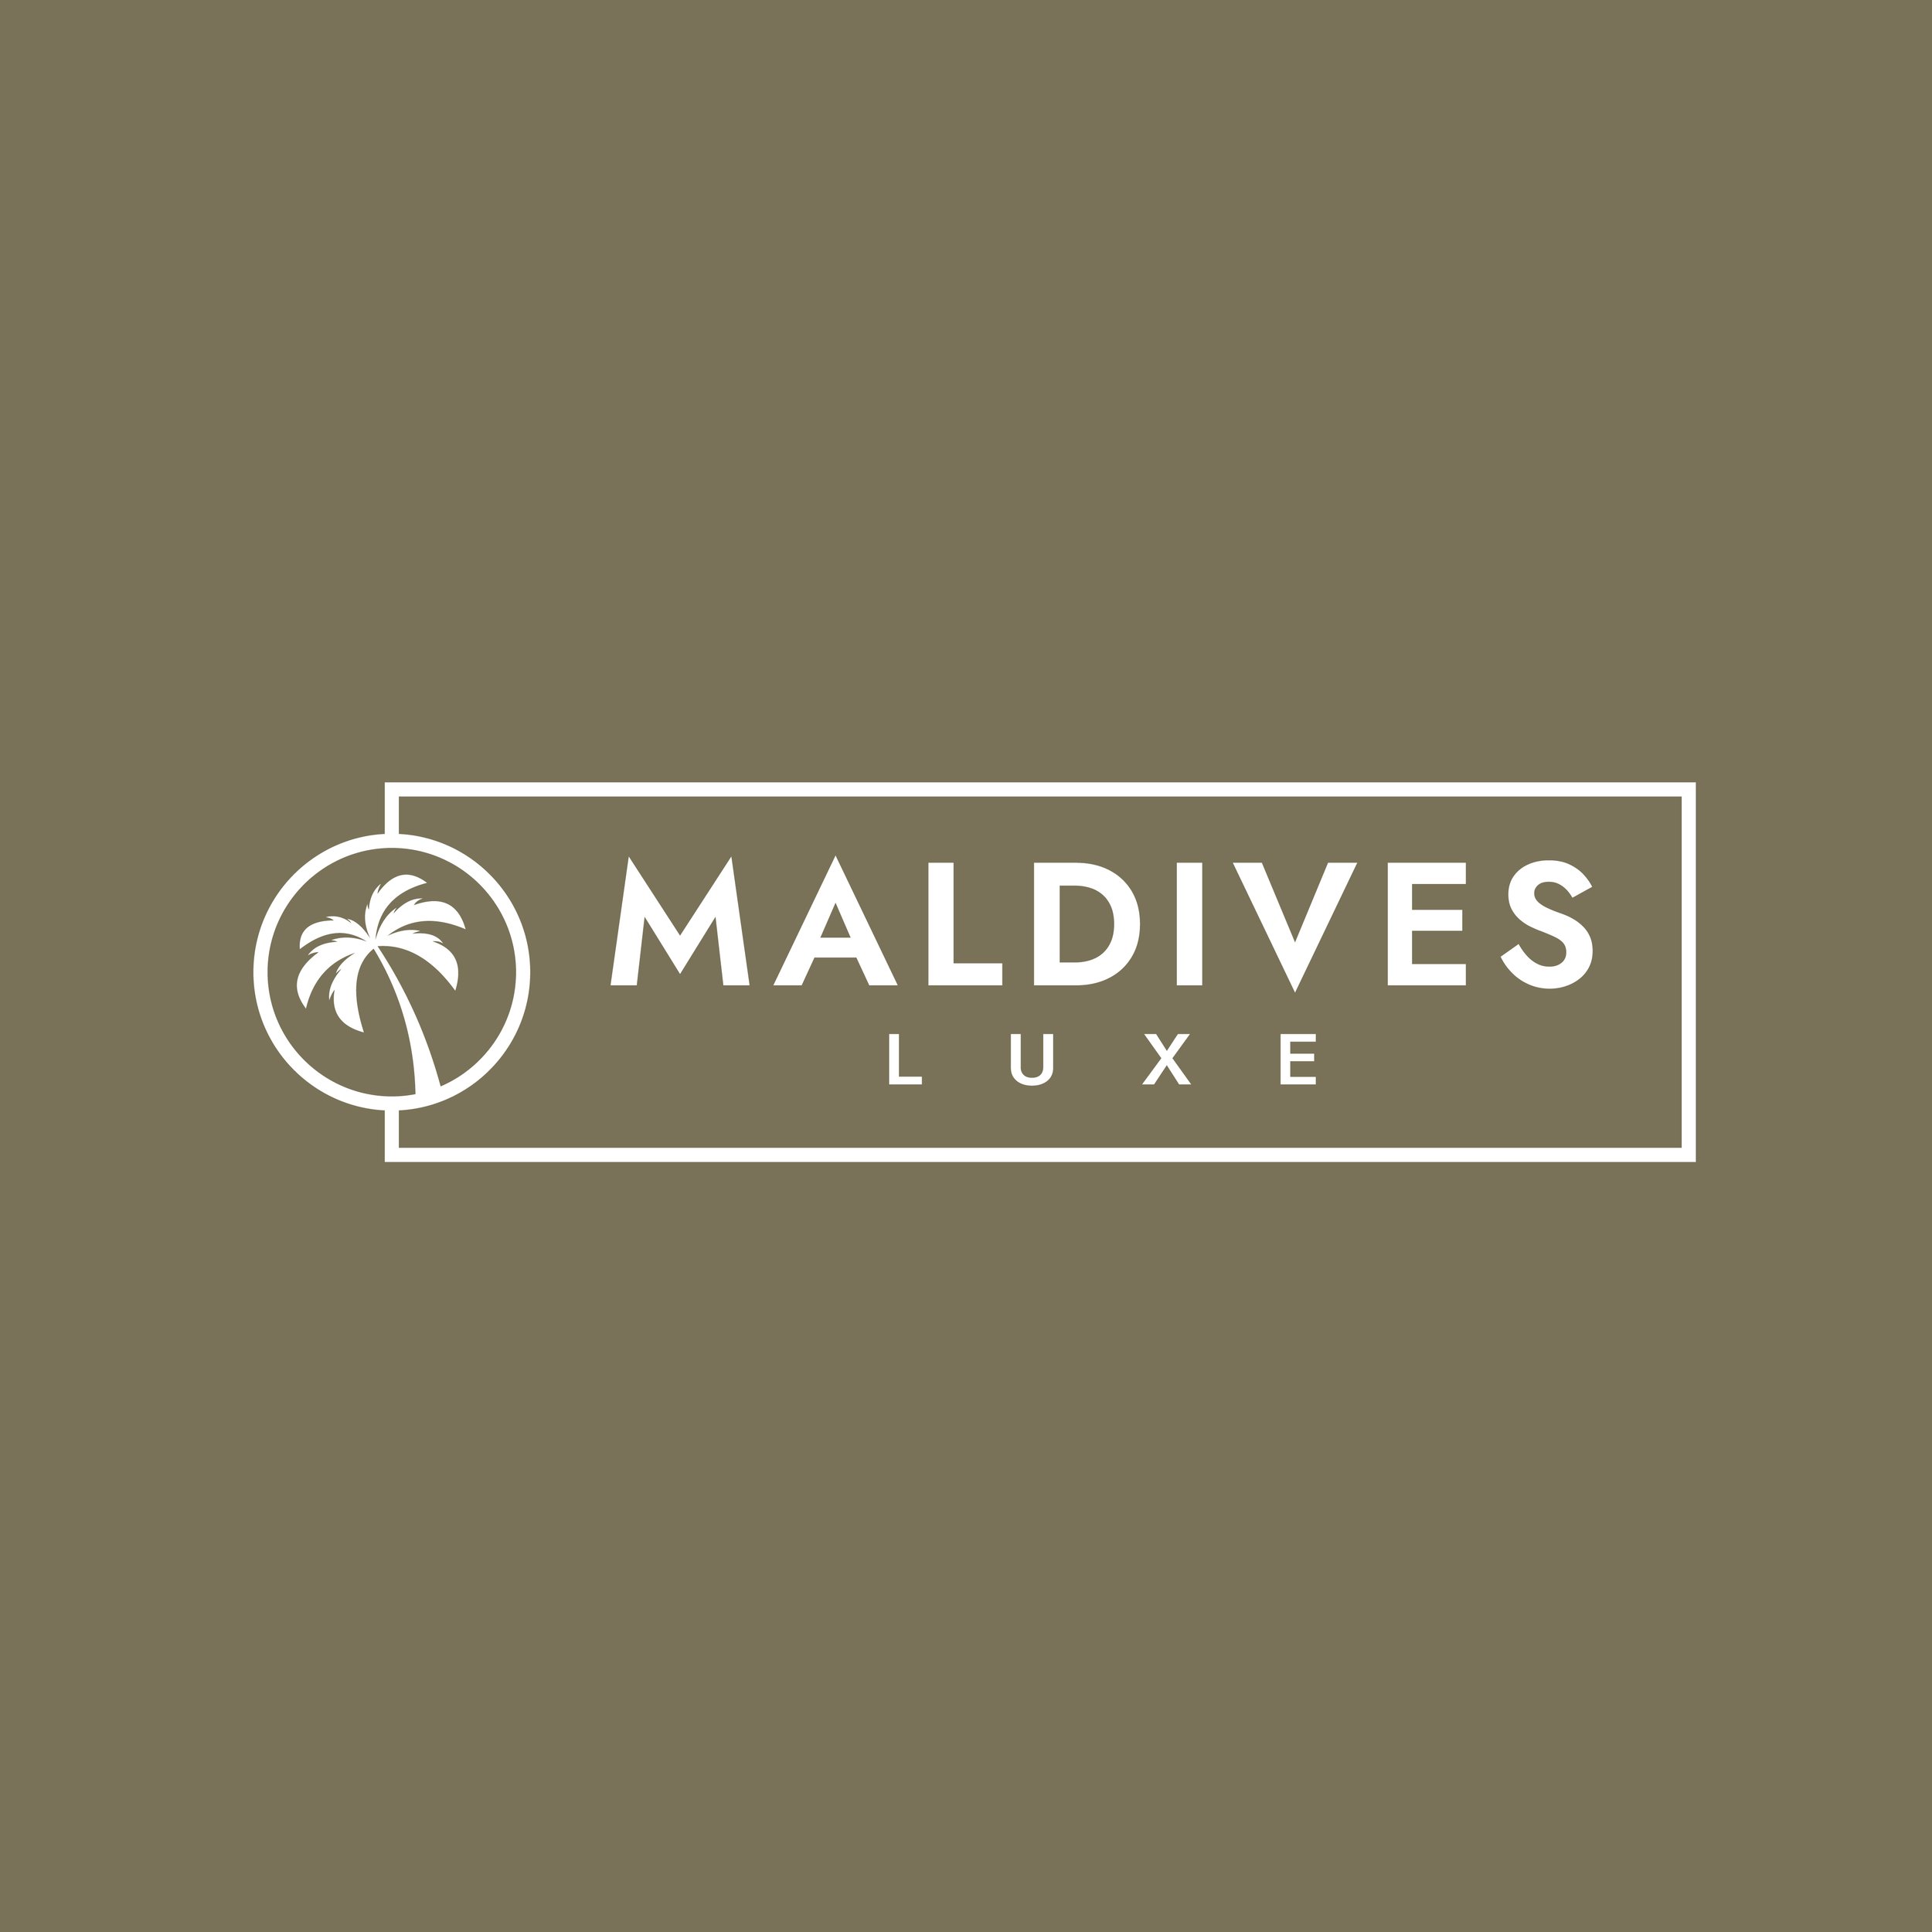 Maldives Luxe-01.jpg